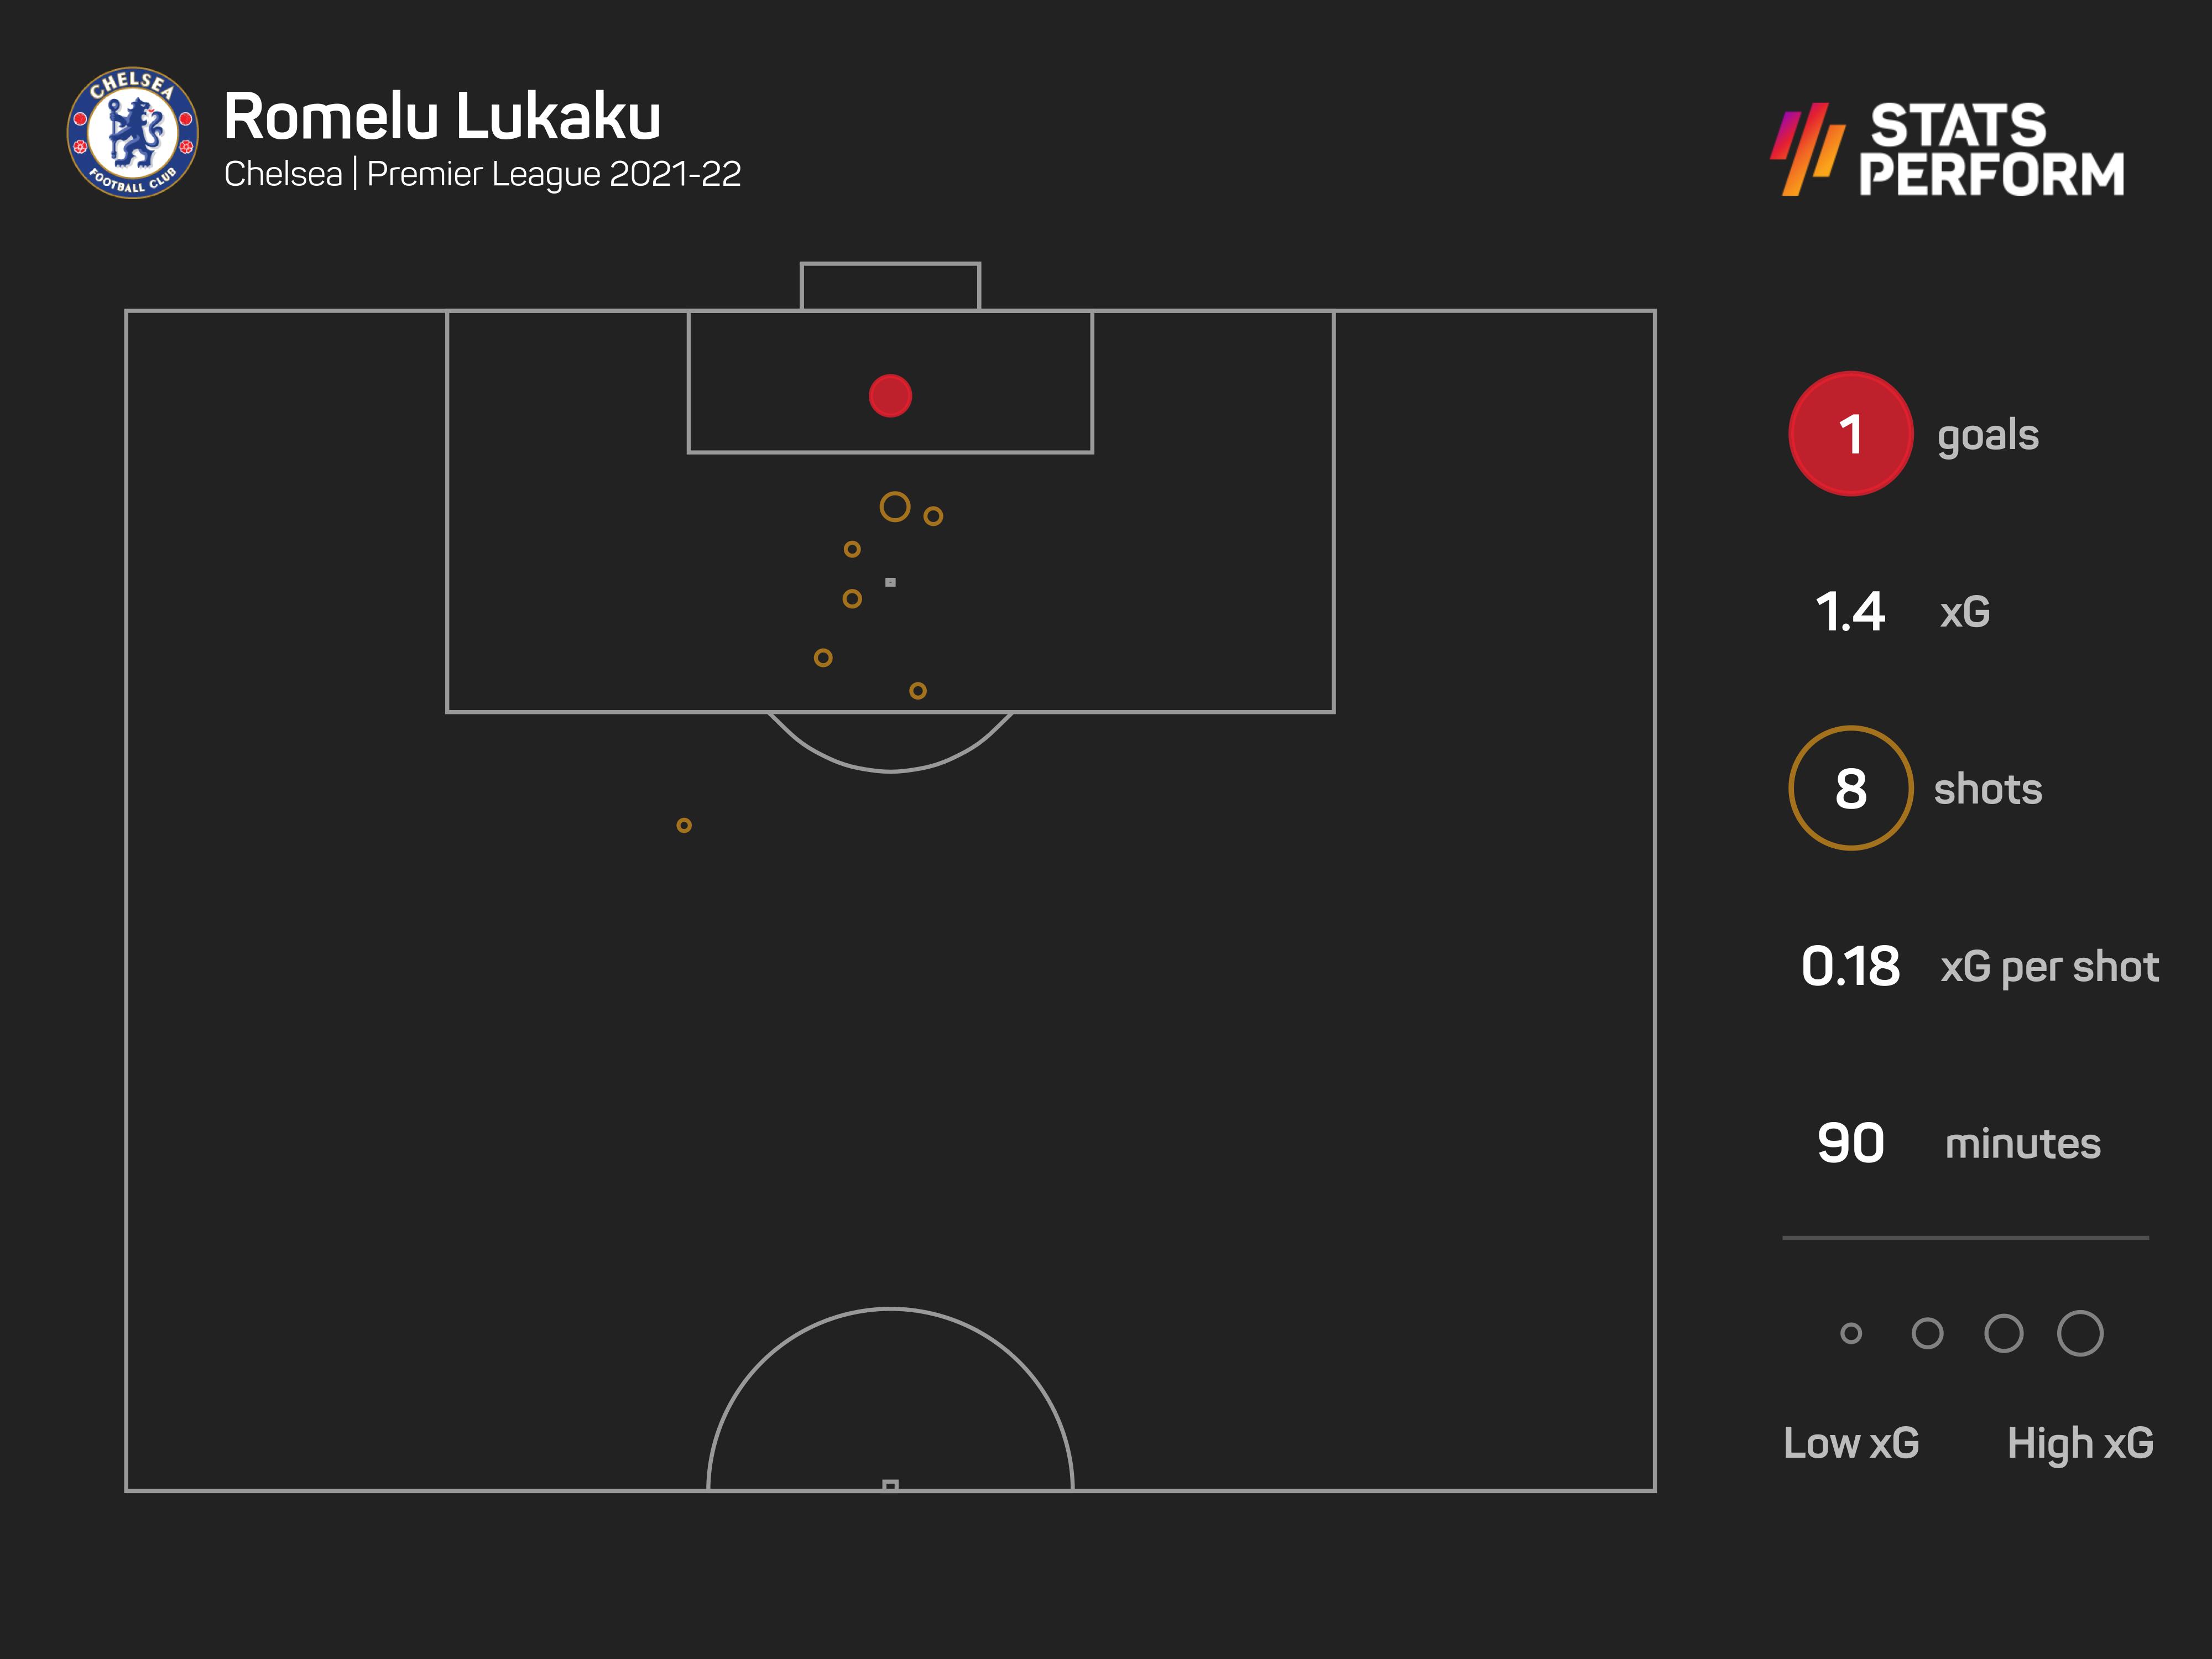 Romelu Lukaku was a constant threat to Arsenal